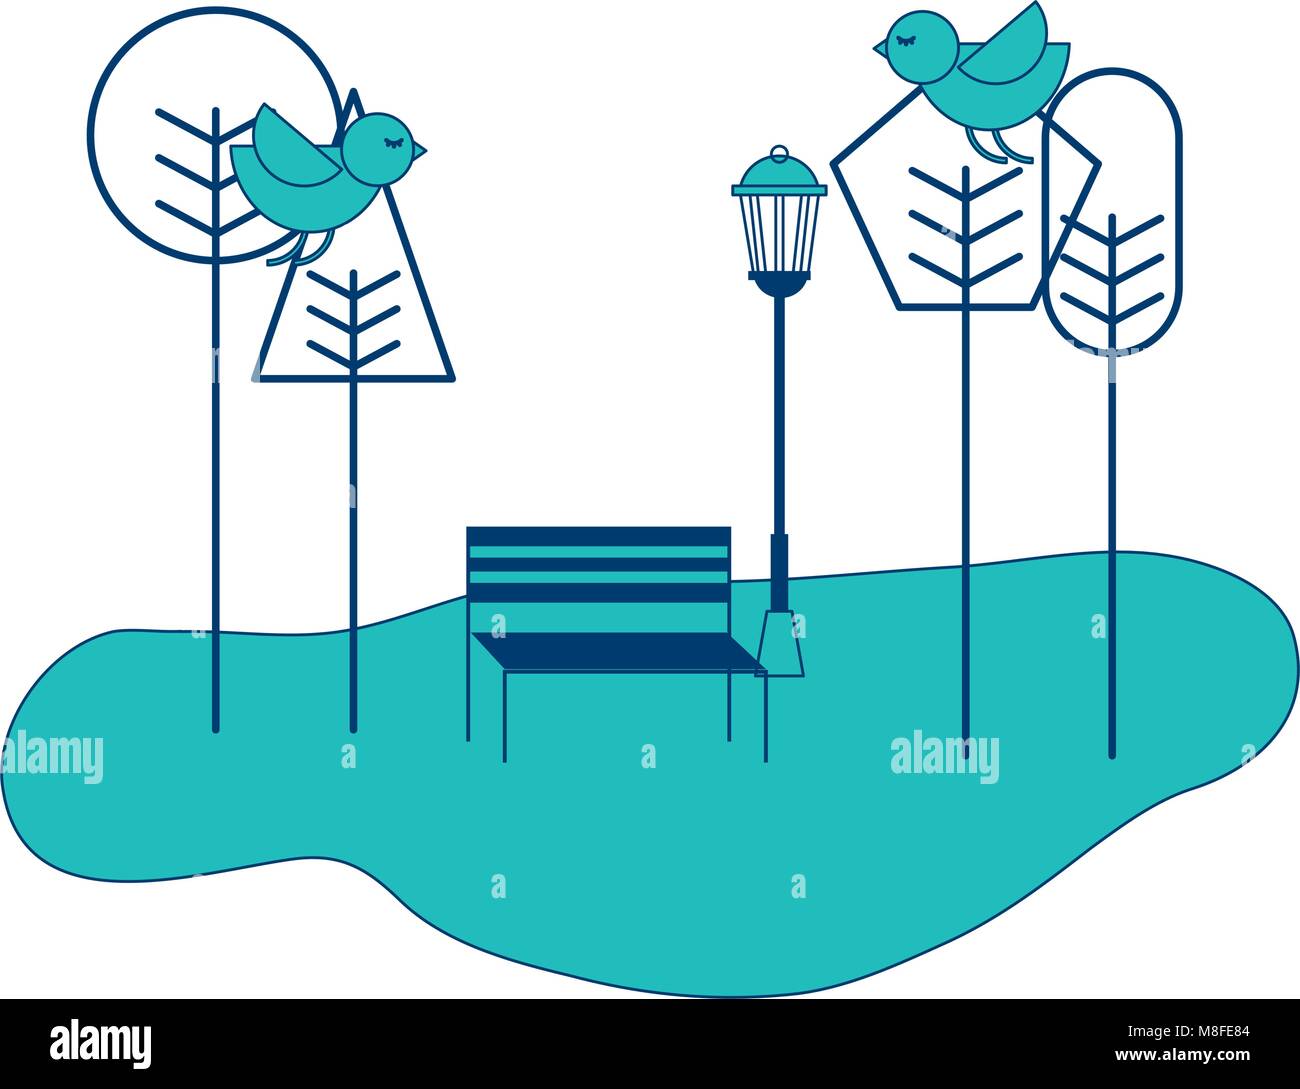 park bench trees birds natural spring landscape vector illustration blue and green image Stock Vector